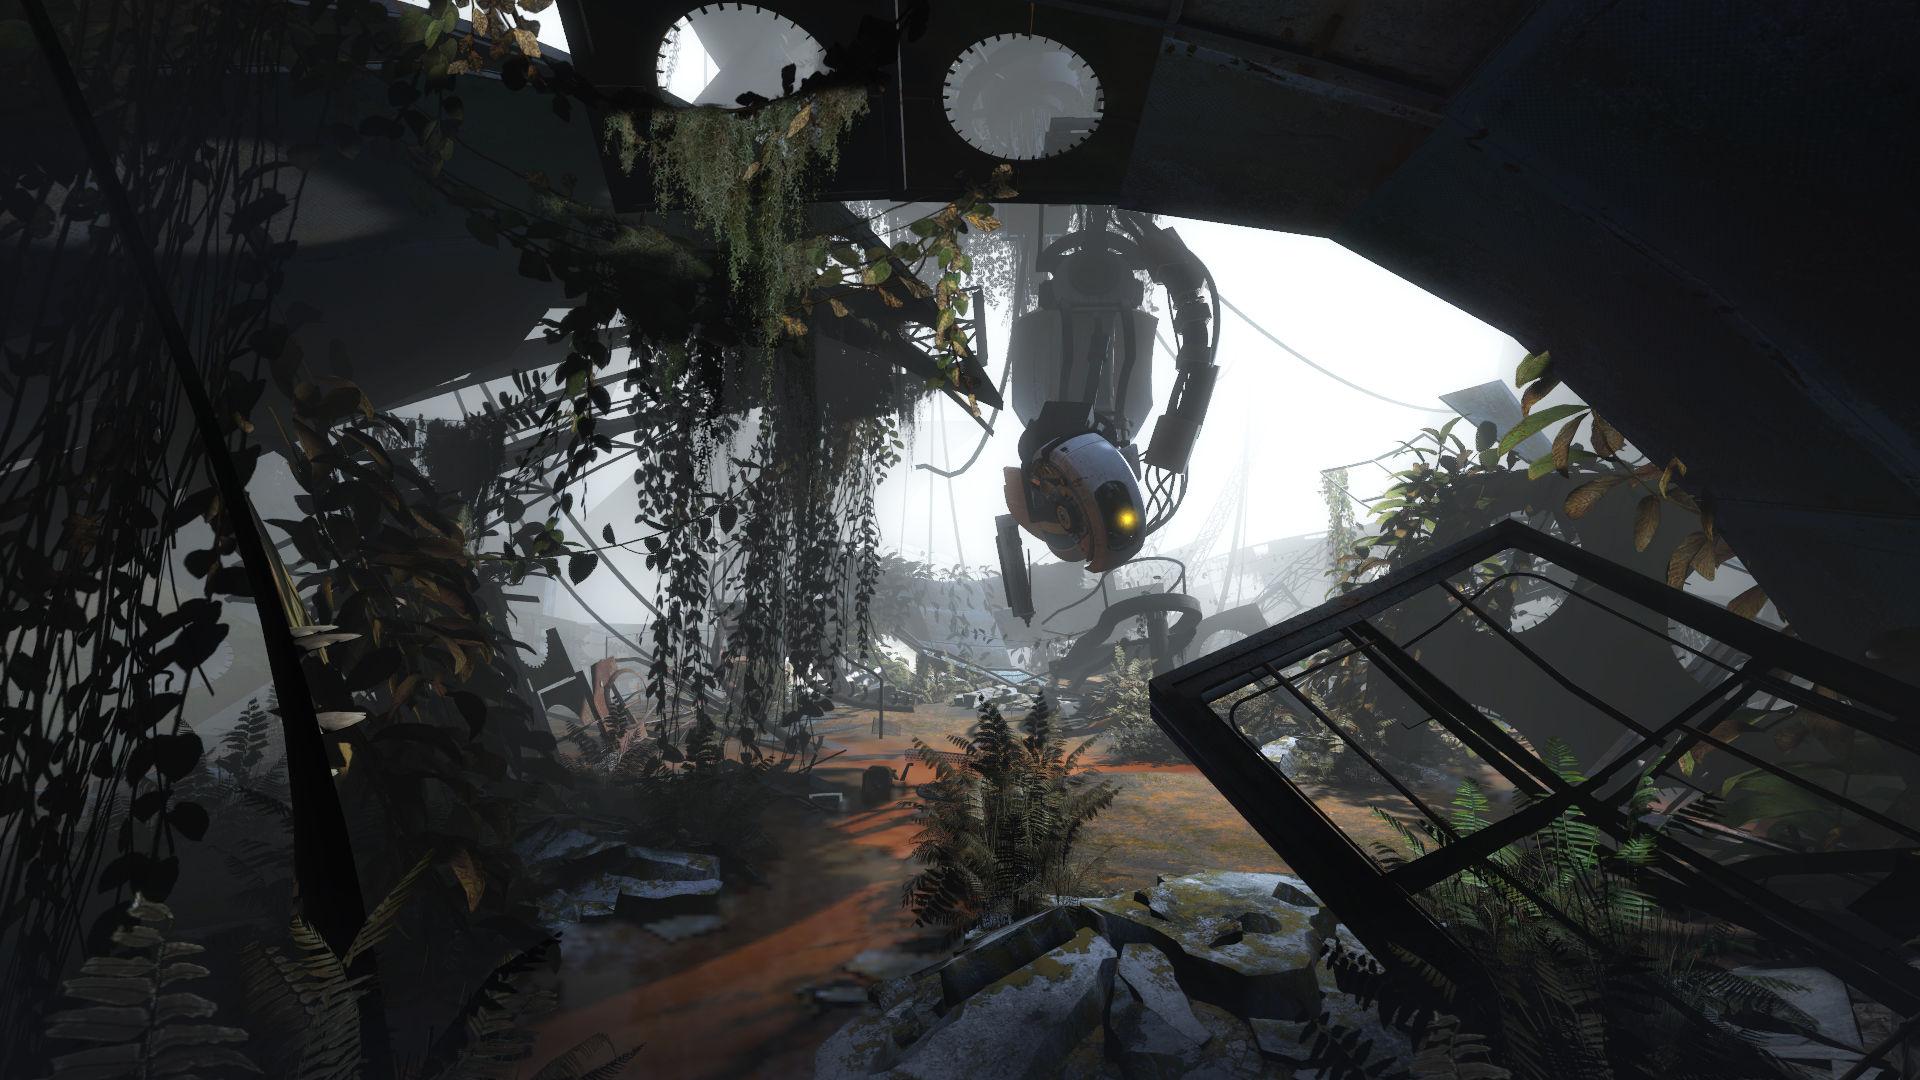 Screenshot №1 from game Portal 2